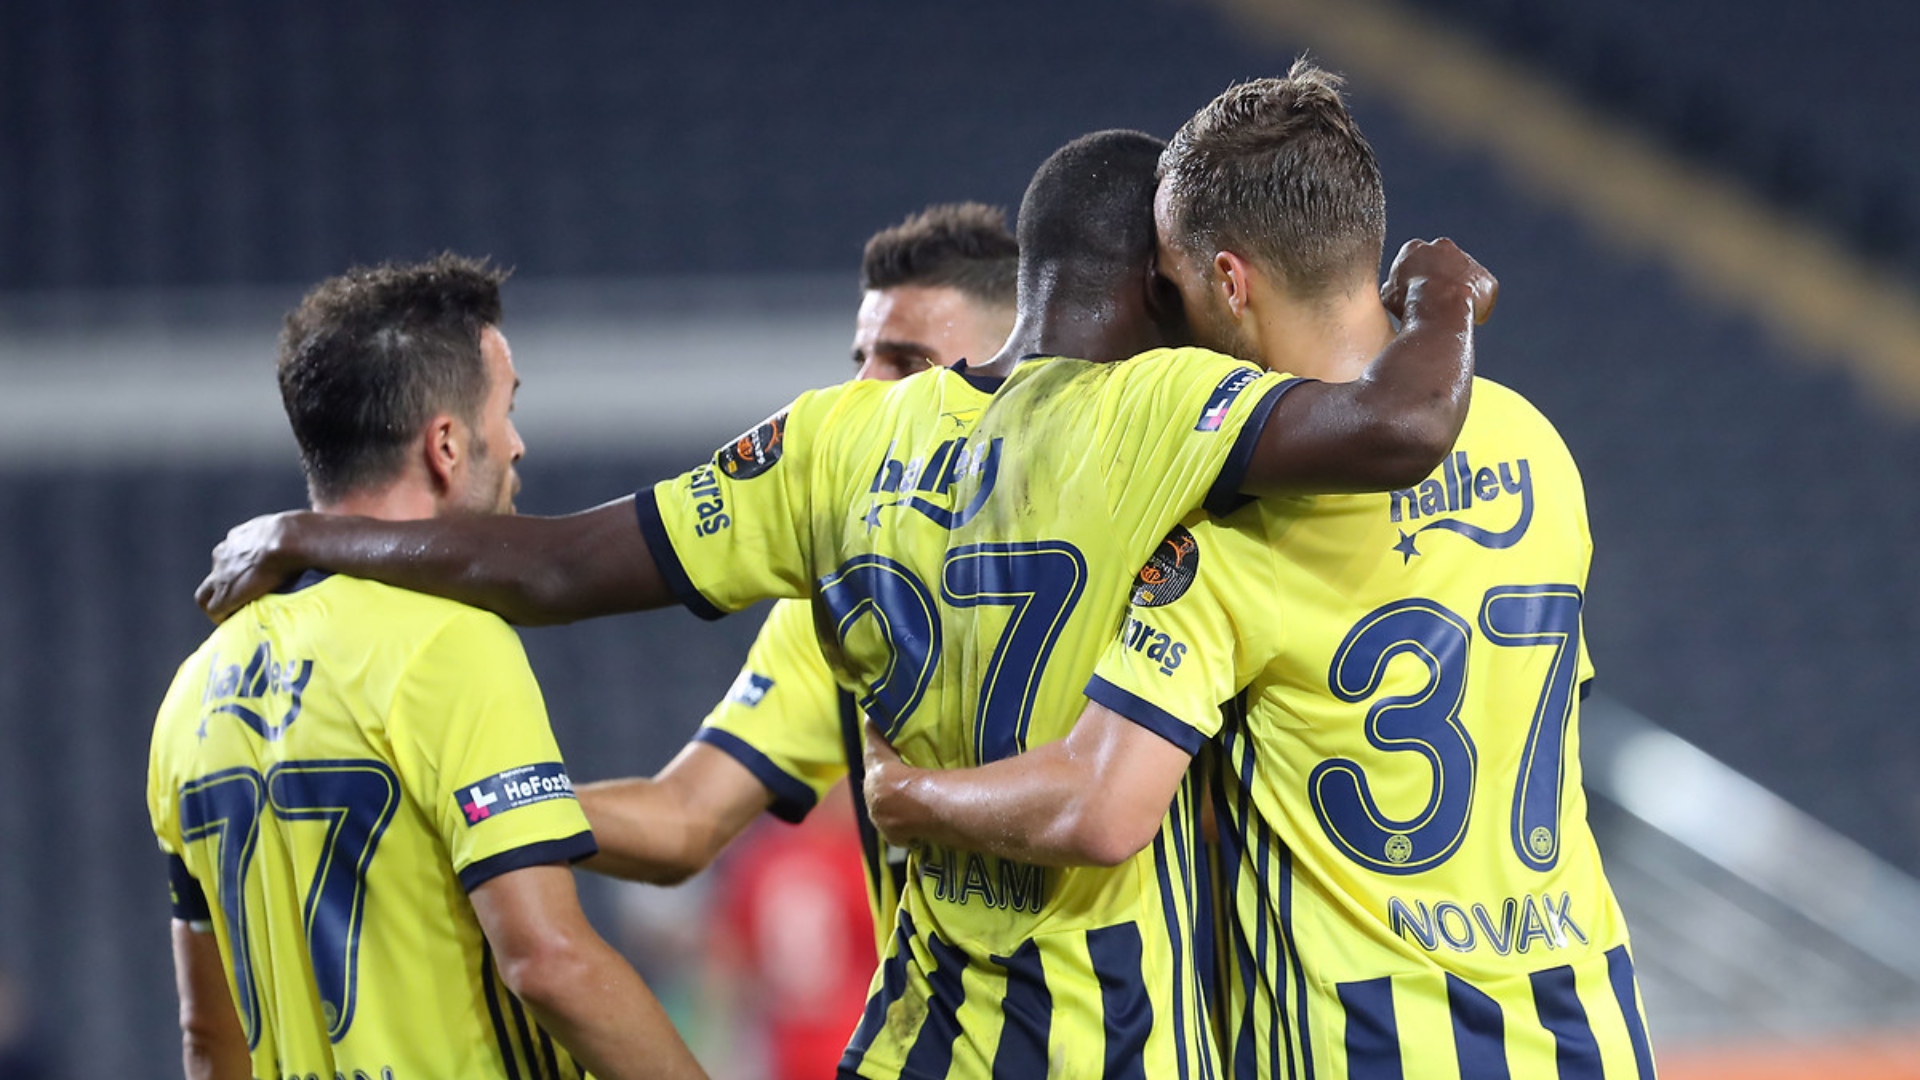 Download Fenerbahçe Kadro Wallpaper 2020 Pictures